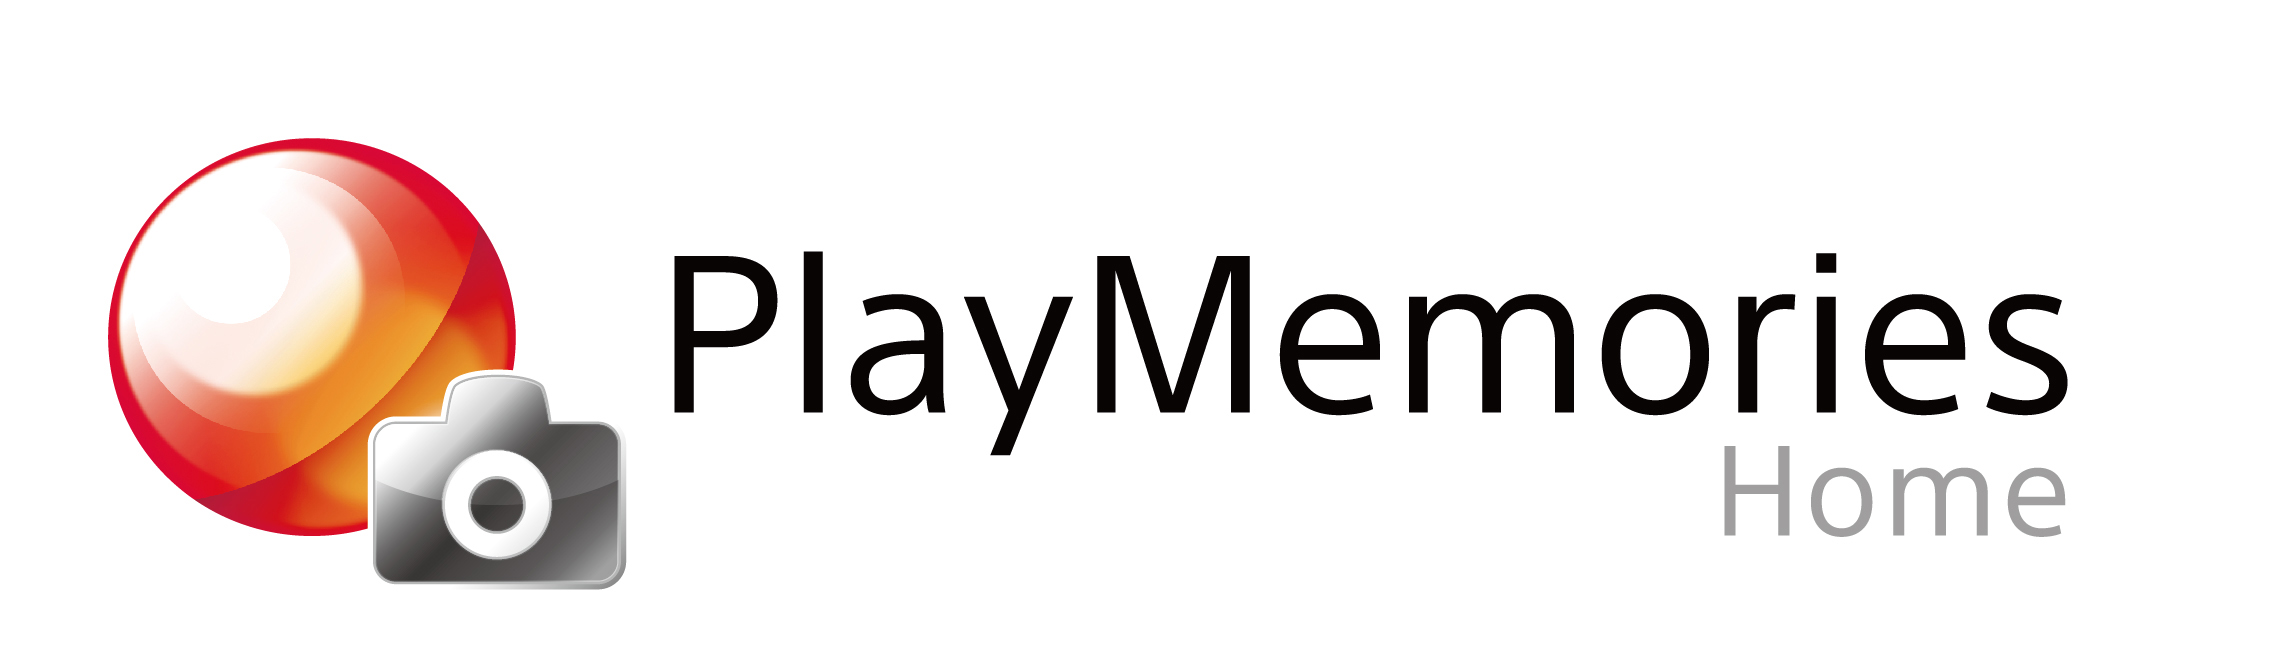 PlayMemories_logo.jpg